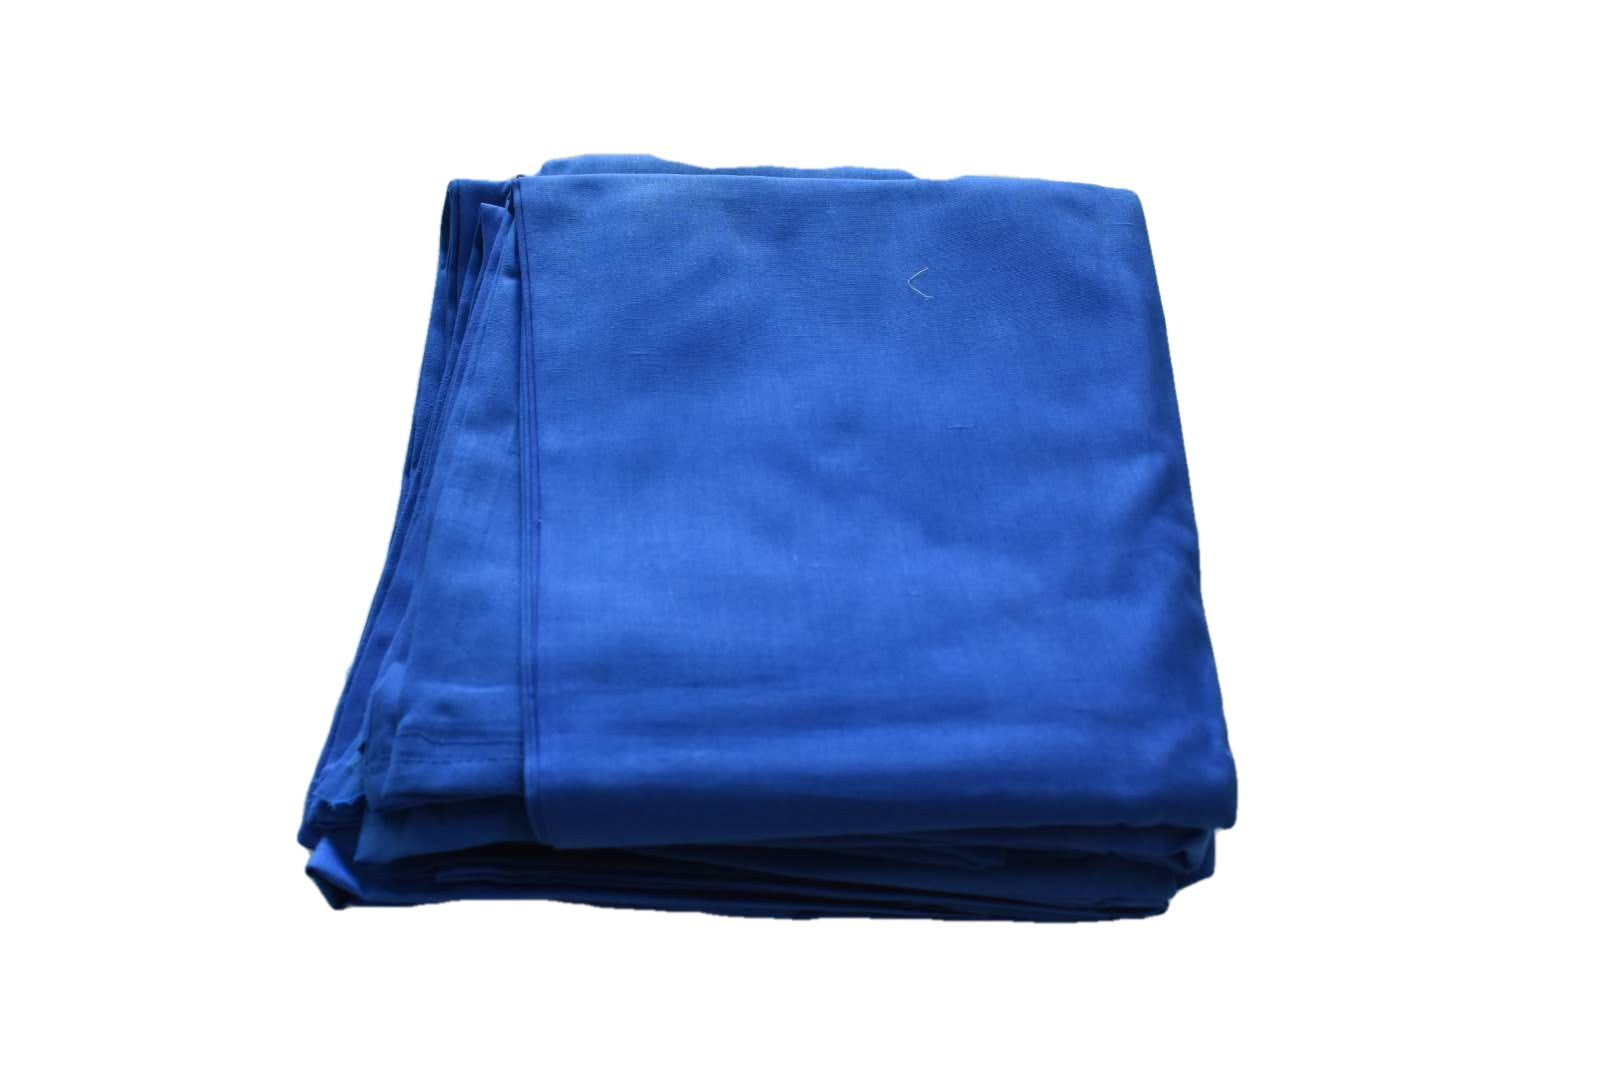 Underskirt / Petticoat High Quality Cotton - Various colors- Size Medium - Waist 30/32